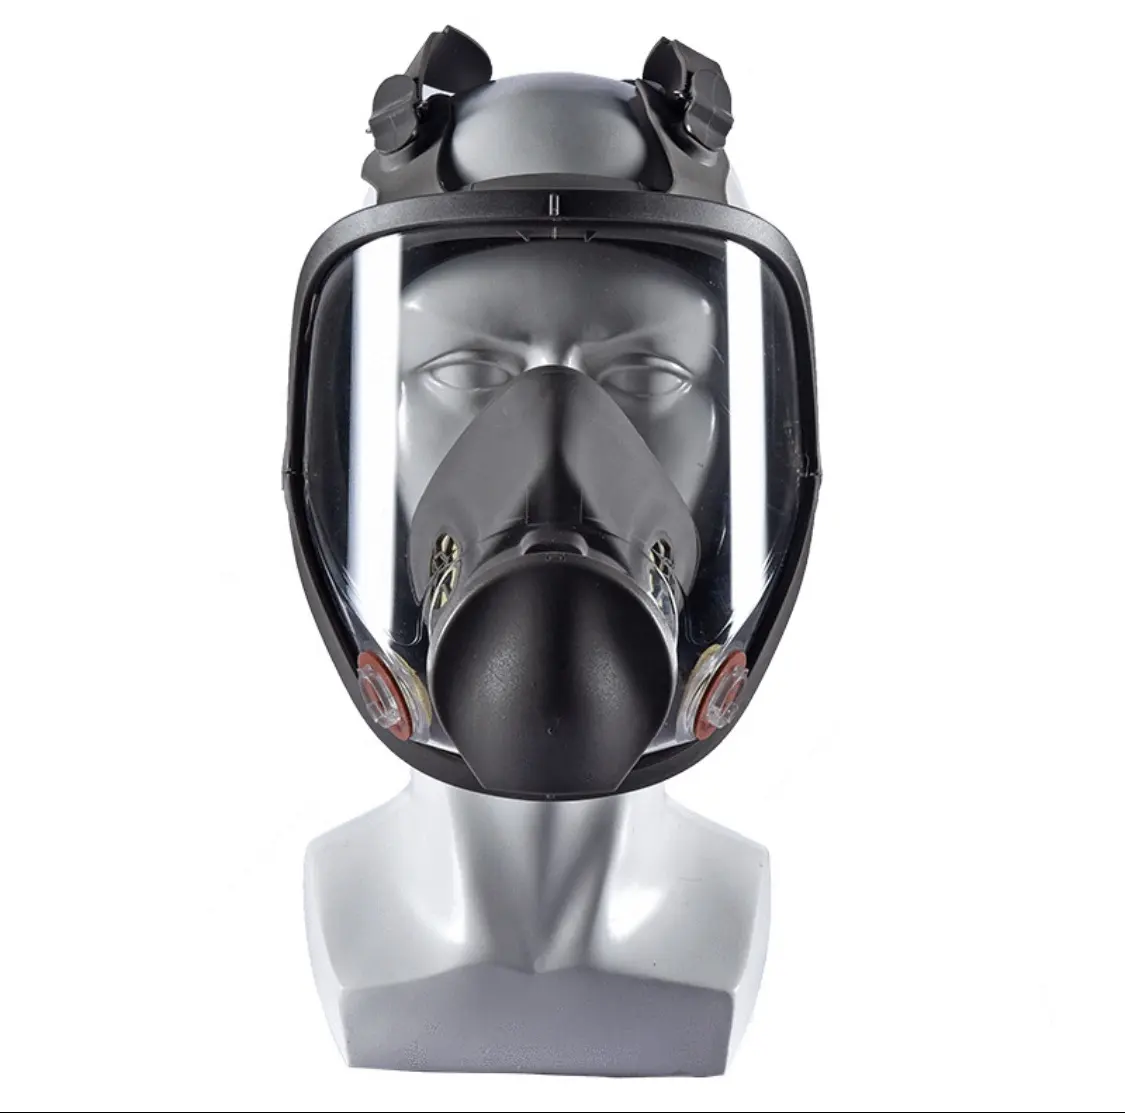 6800 Protection respiratoire Réutilisable silicone masque complet masque à gaz respirateur masque respiratoire Respirador de mascara completa careta